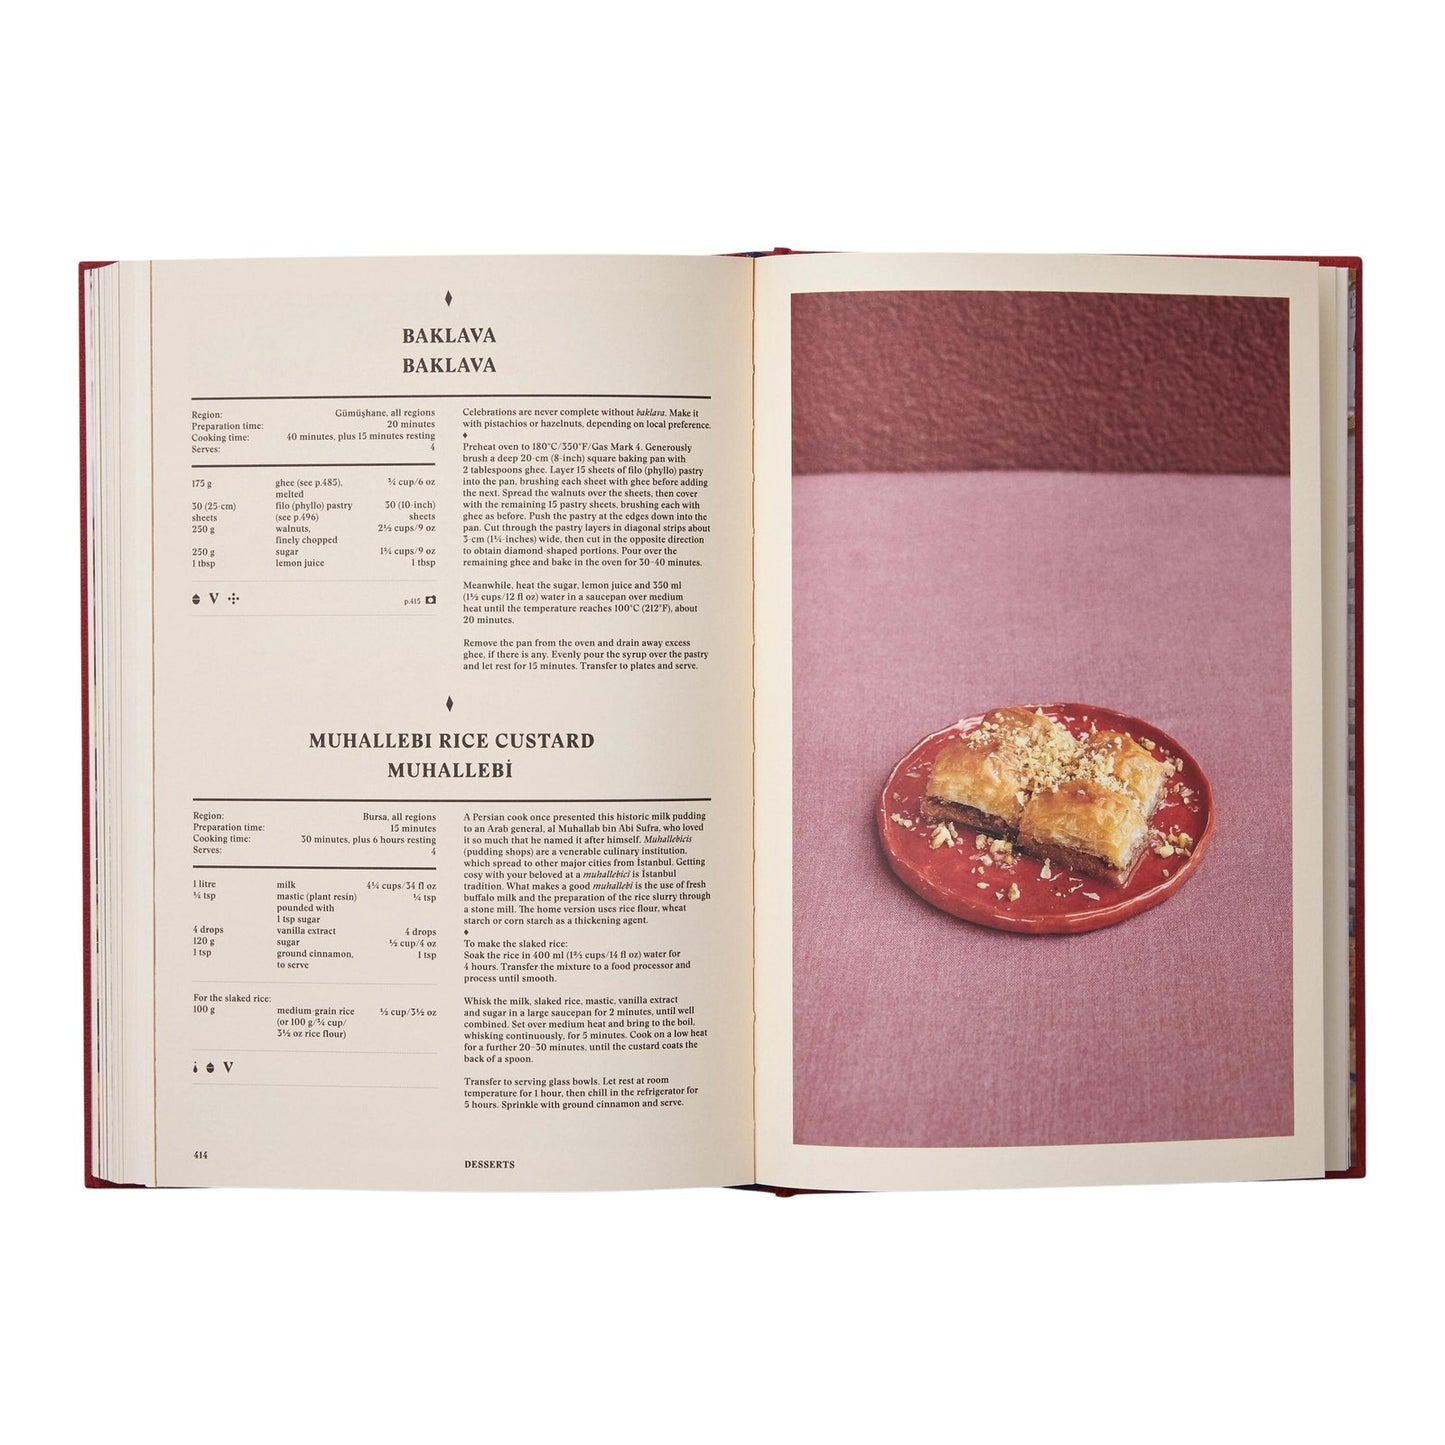 Turkish Cookbook - Heraclea Food Co